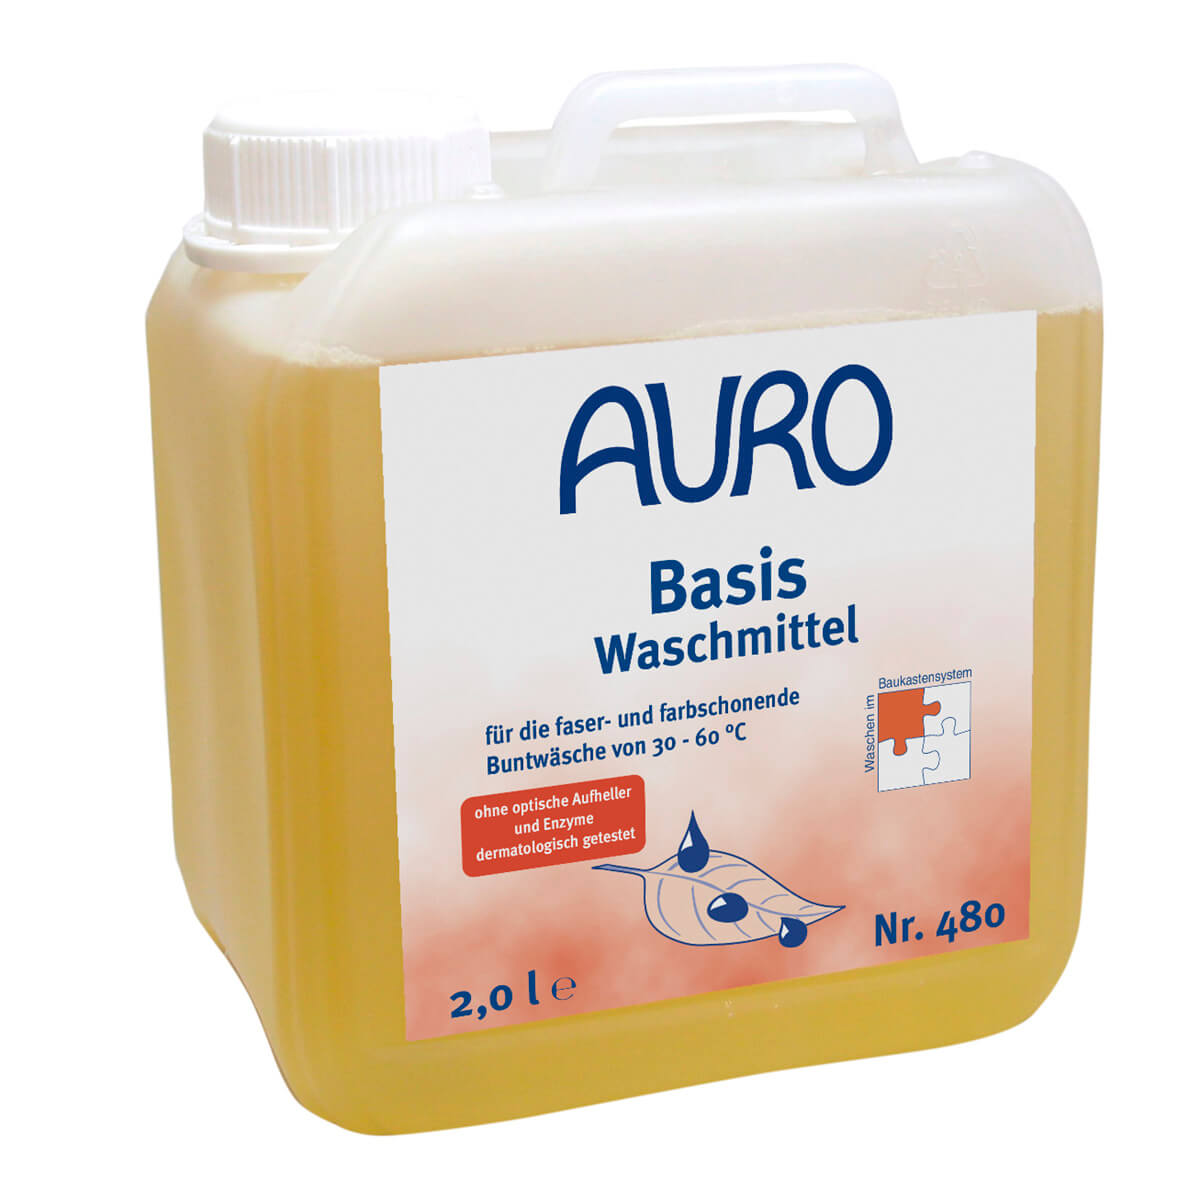 AURO AWALAN Basis-Waschmittel Flüssigwaschmittel ökologisches Waschmittel